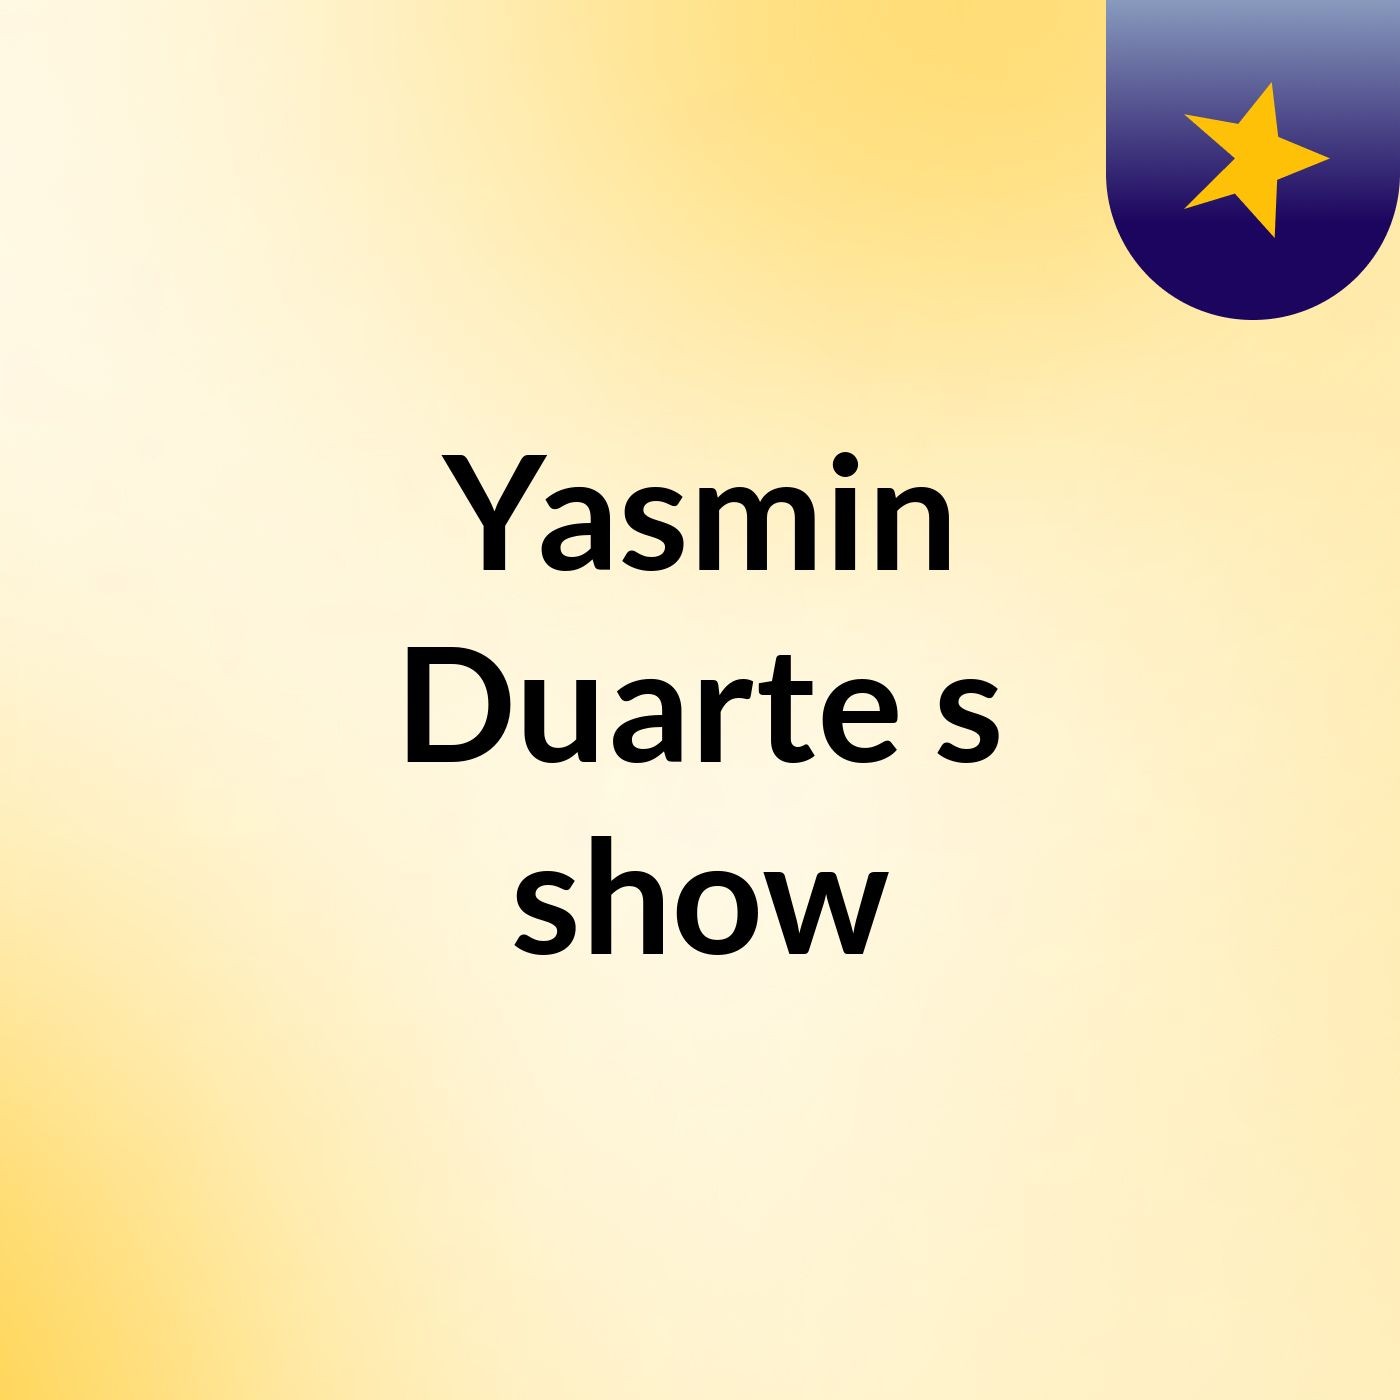 Yasmin Duarte's show